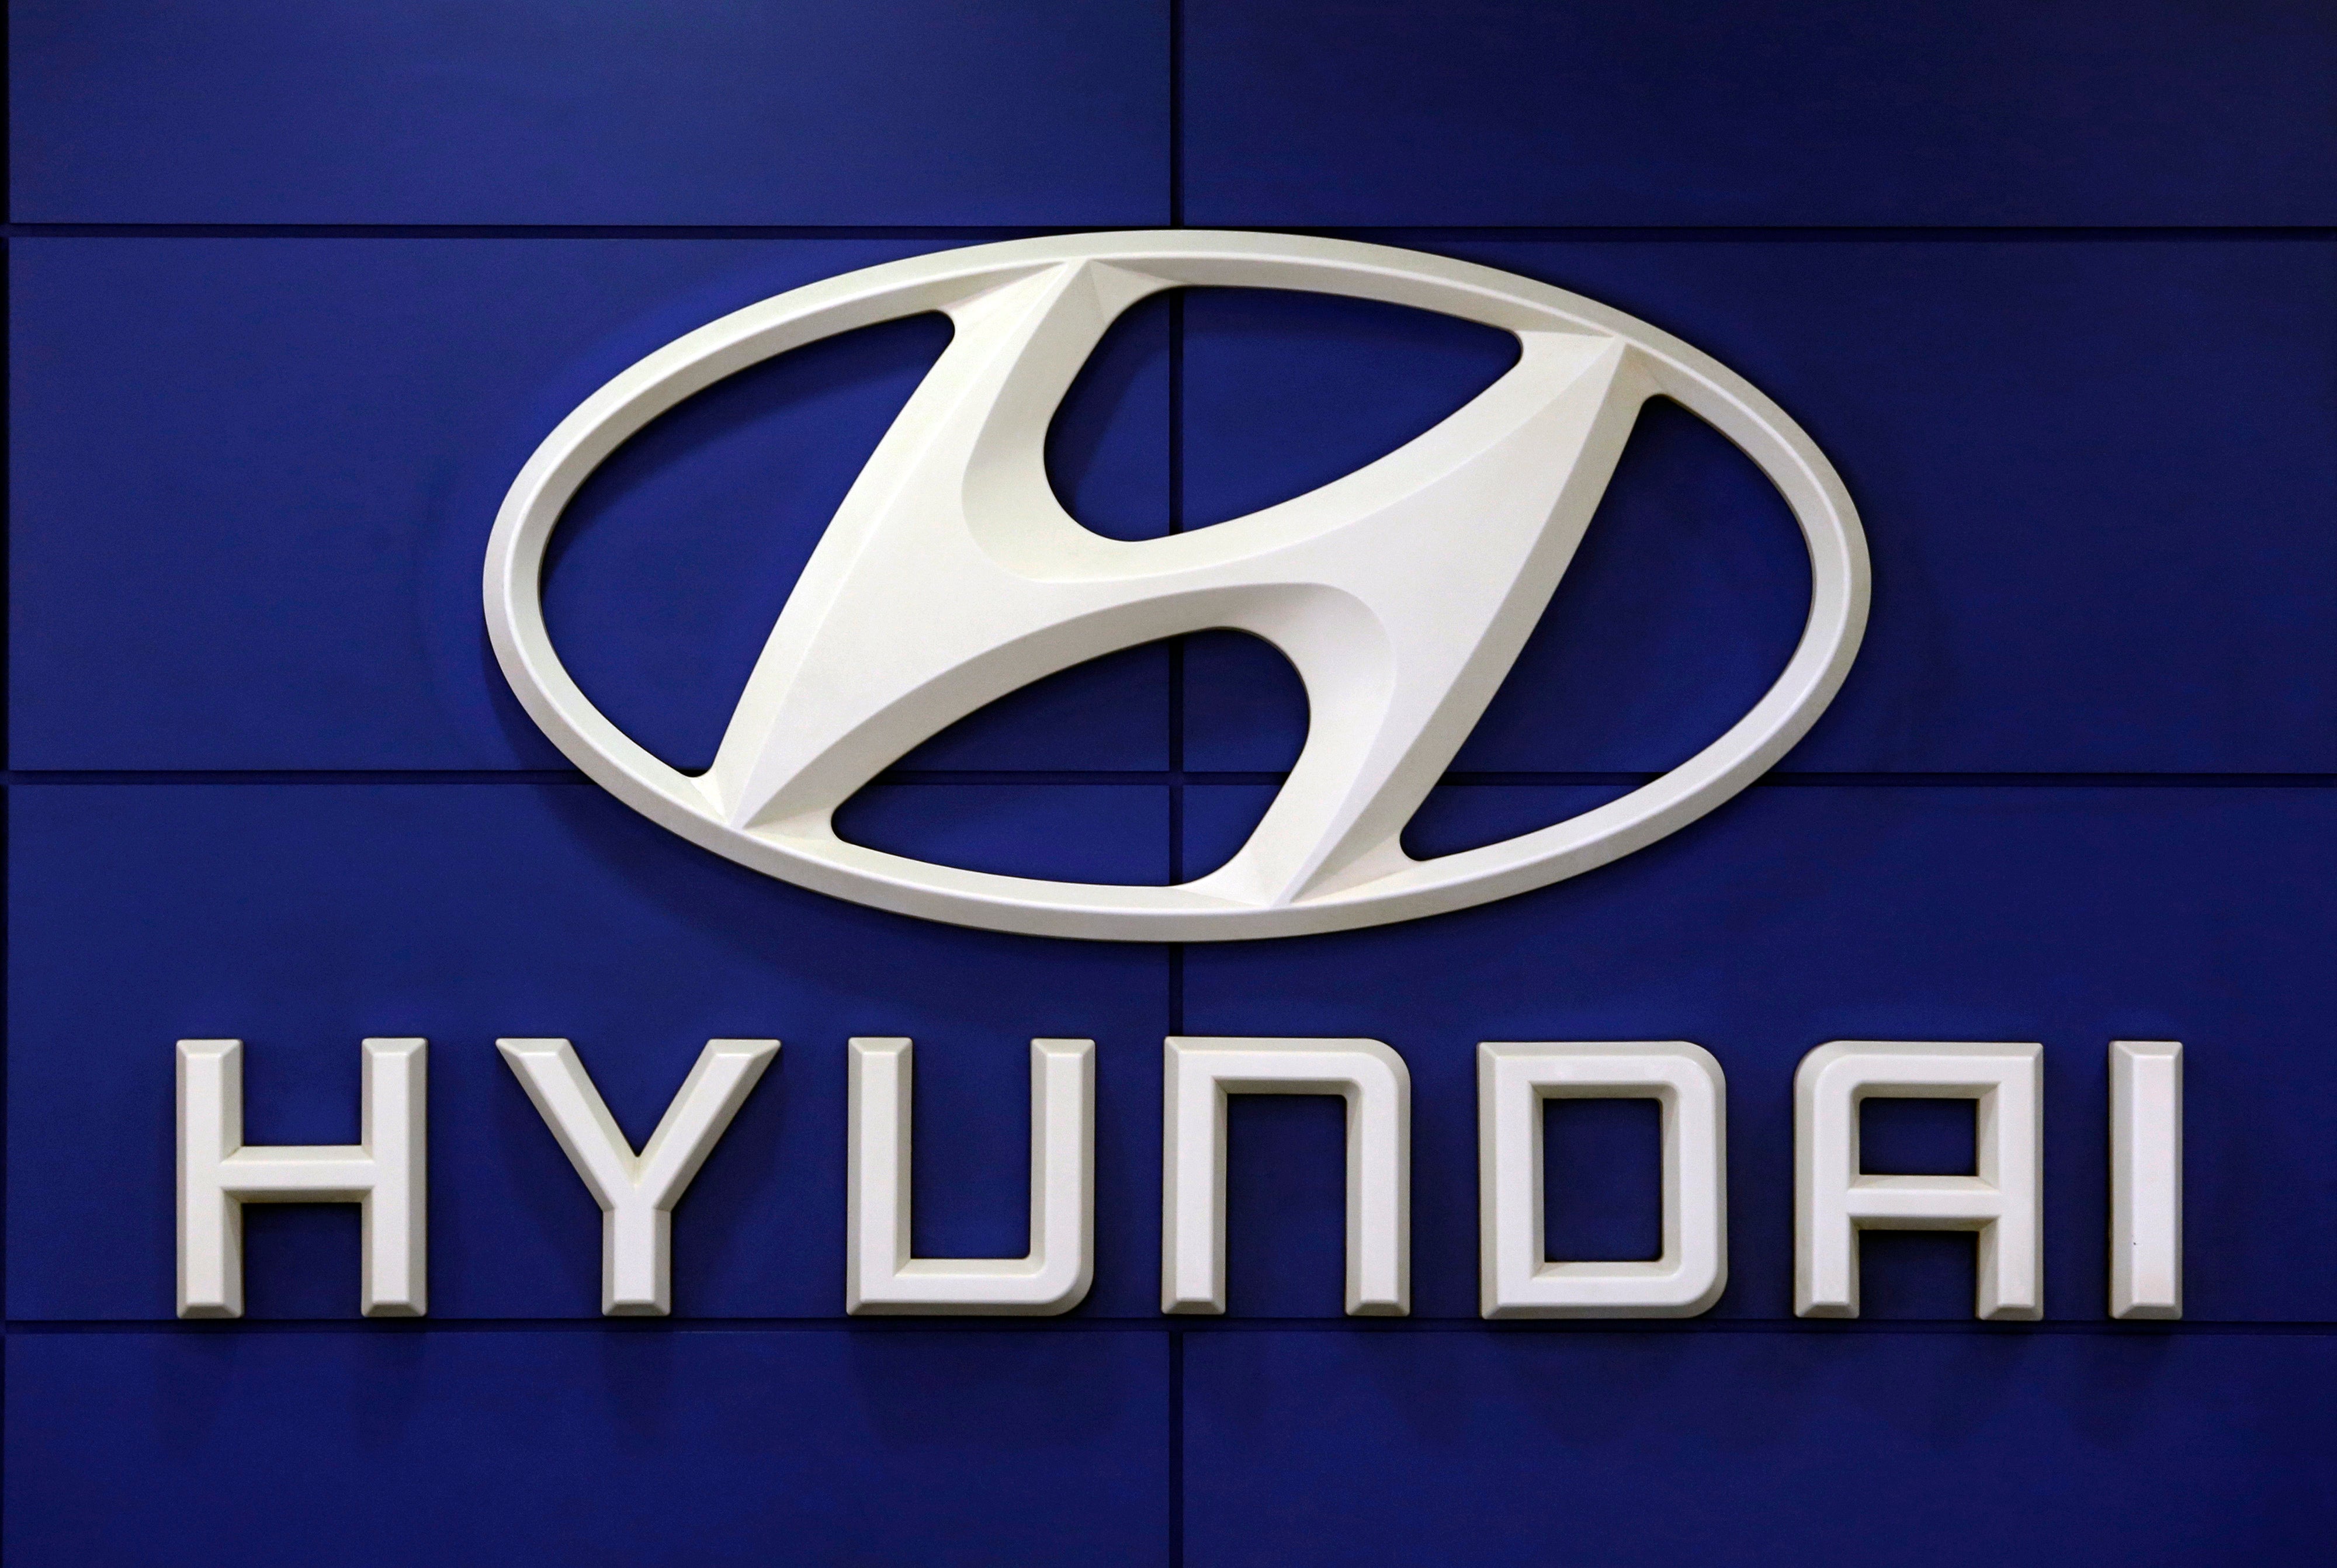 Hyundai Motors is facing backlash in India after Pakistan partner expressed solidarity with Kashmir